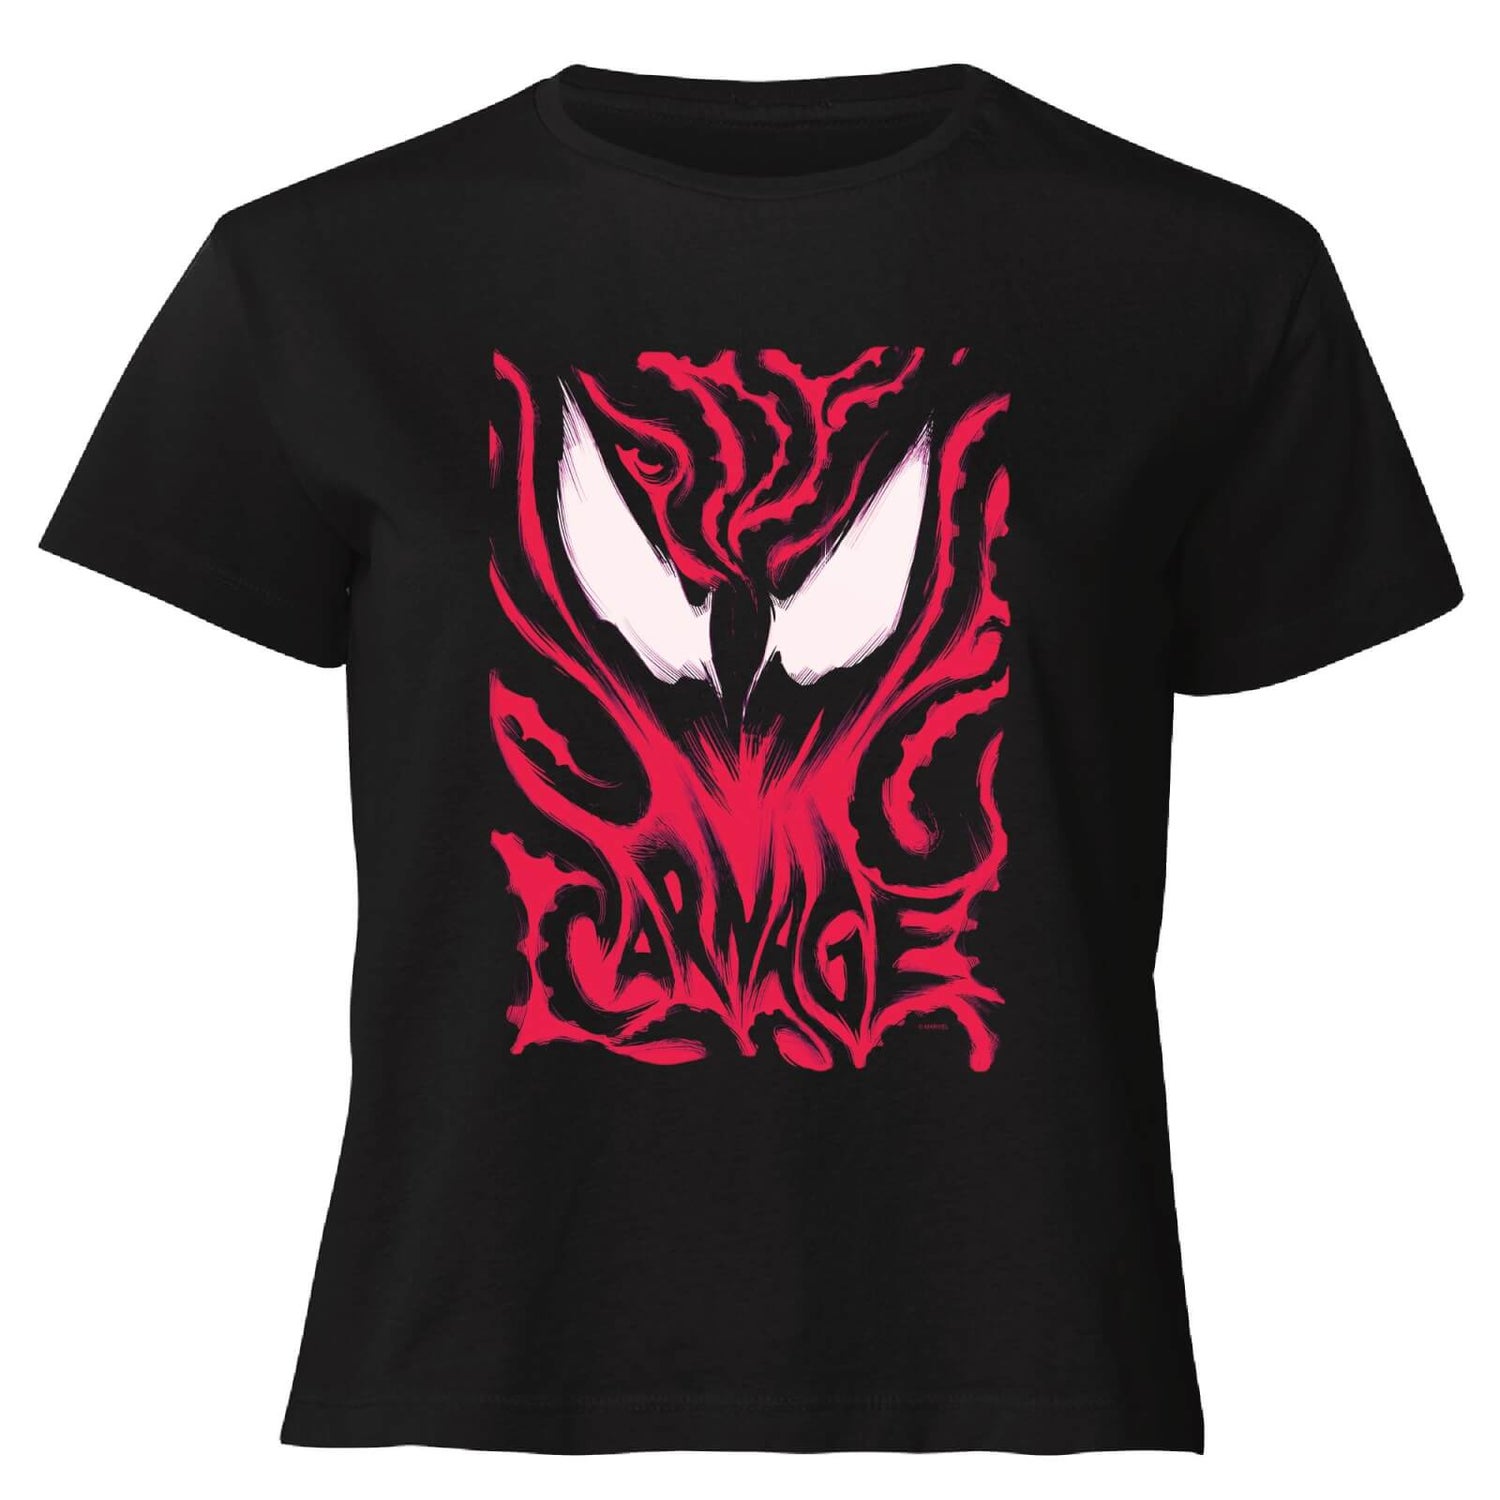 Venom Carnage Women's Cropped T-Shirt - Black